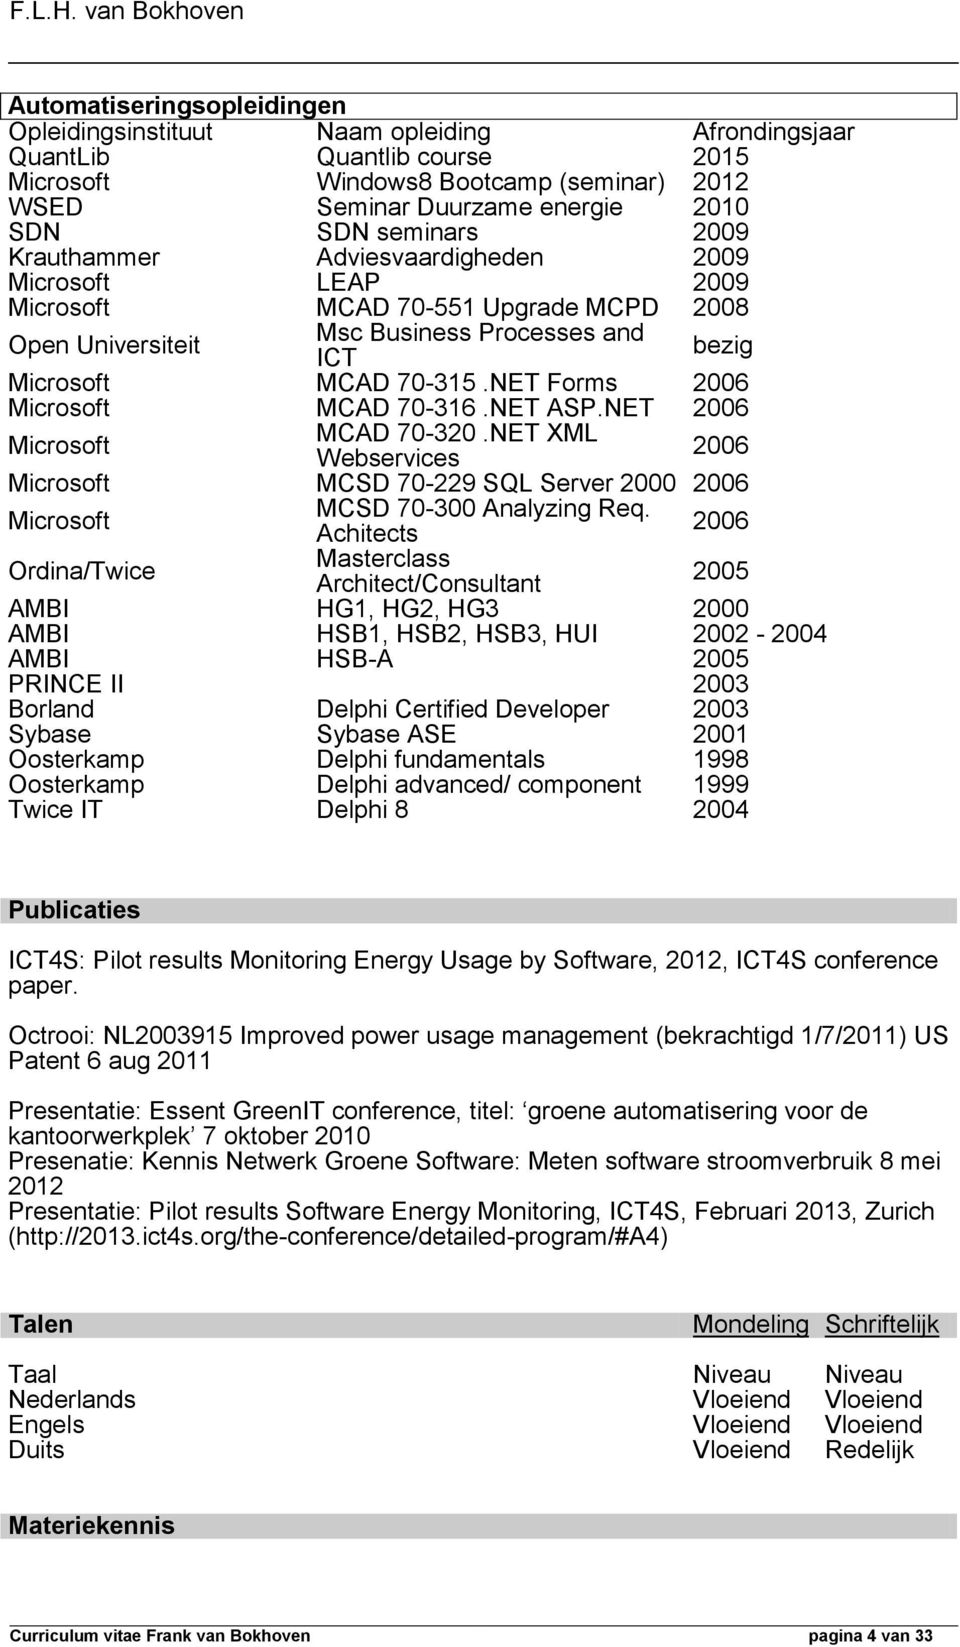 NET Forms 2006 Microsoft MCAD 70-316.NET ASP.NET 2006 Microsoft MCAD 70-320.NET XML Webservices 2006 Microsoft MCSD 70-229 SQL Server 2000 2006 Microsoft MCSD 70-300 Analyzing Req.